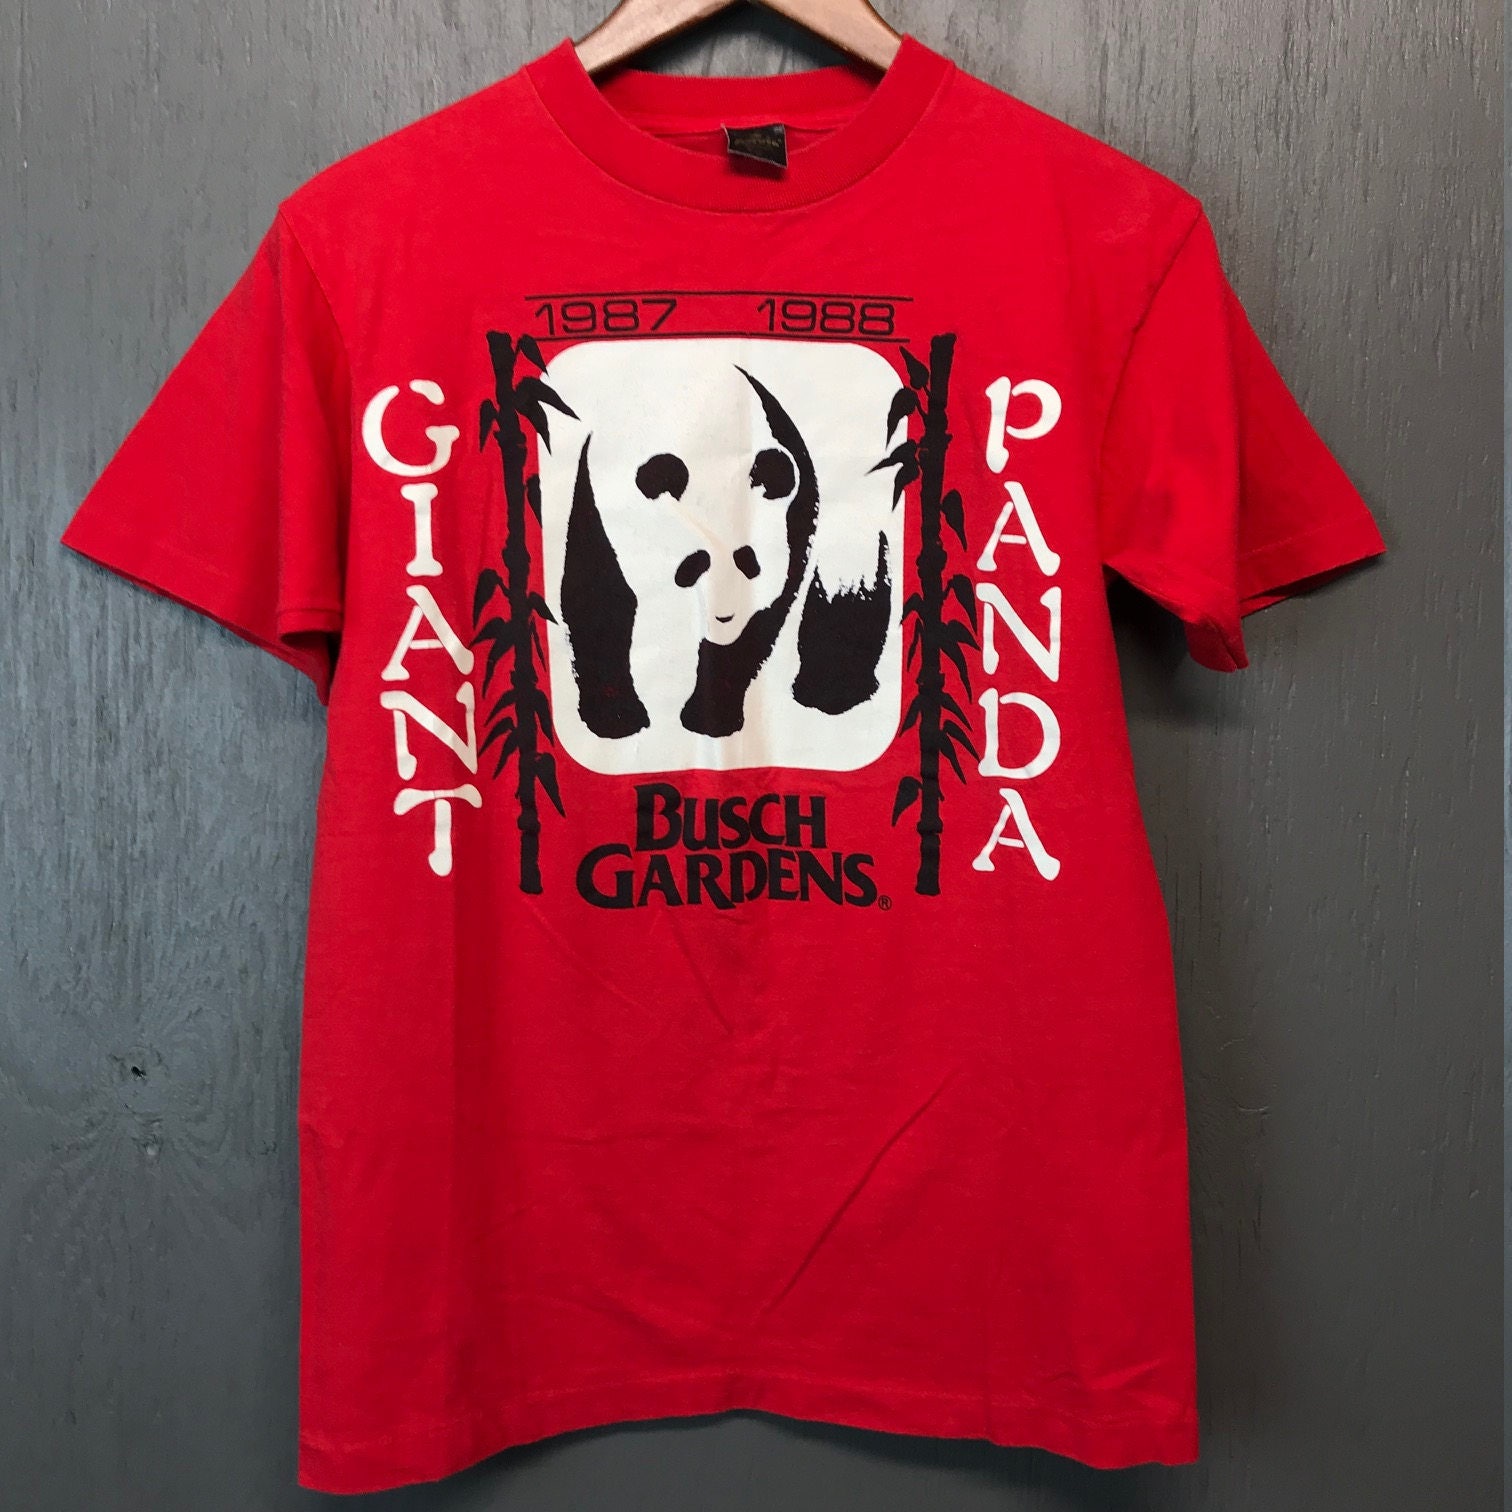 S vintage 80s 1987 1988 Giant Panda bear Busch Gardens t shirt